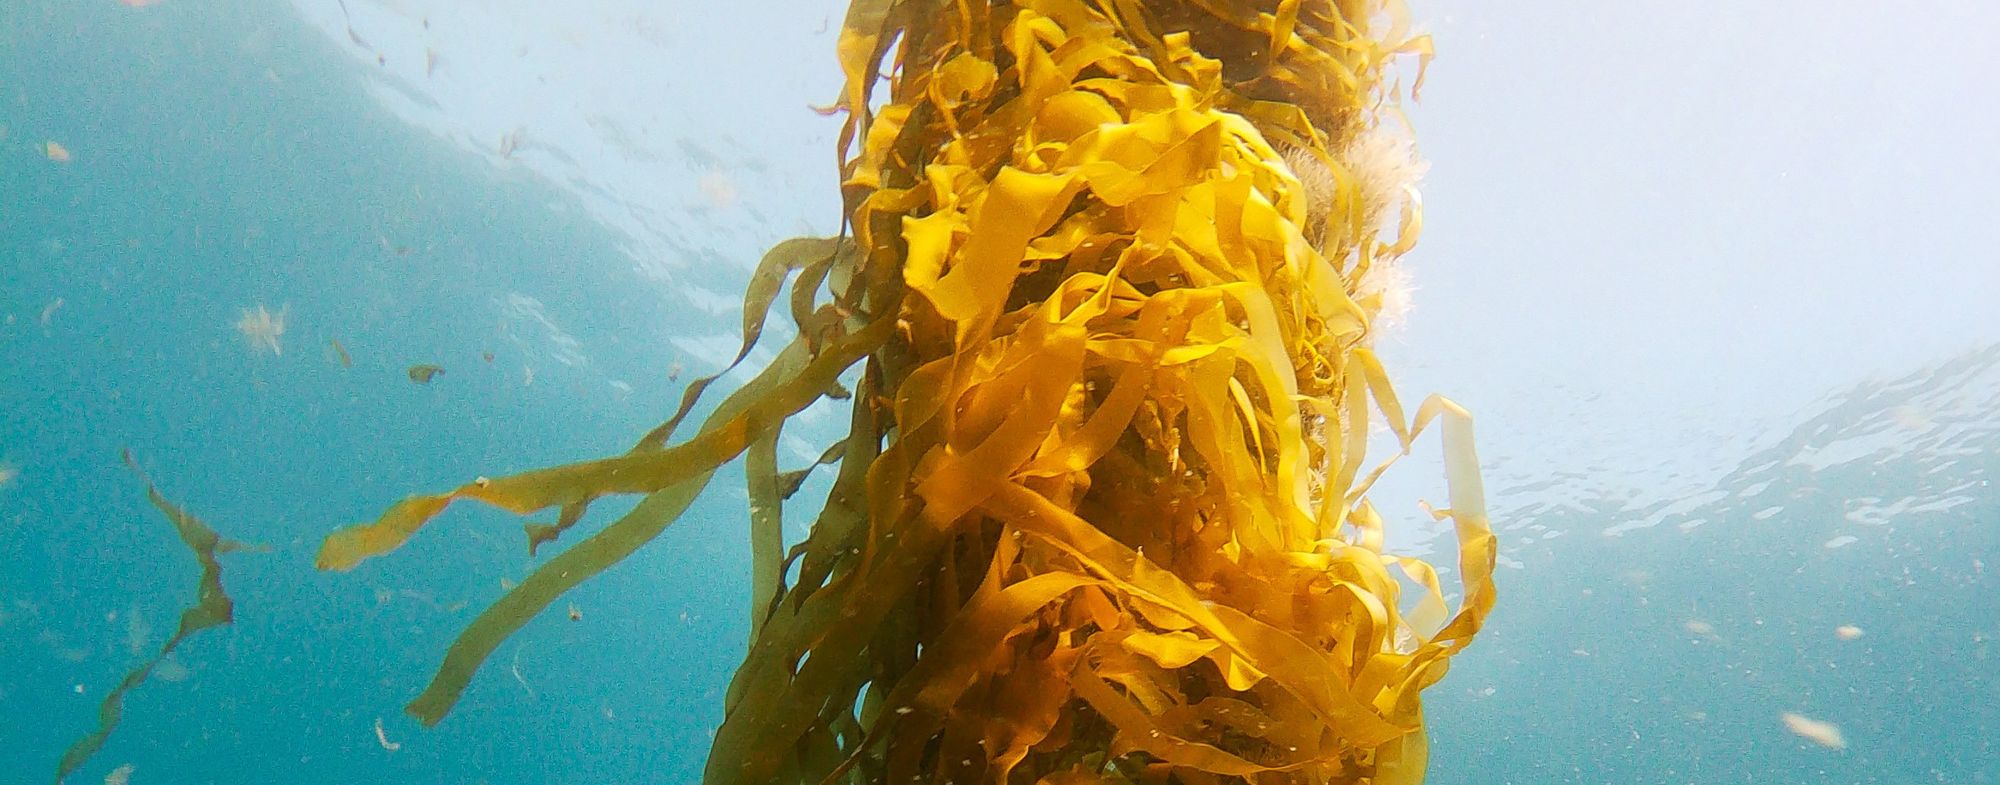 Kelp in water